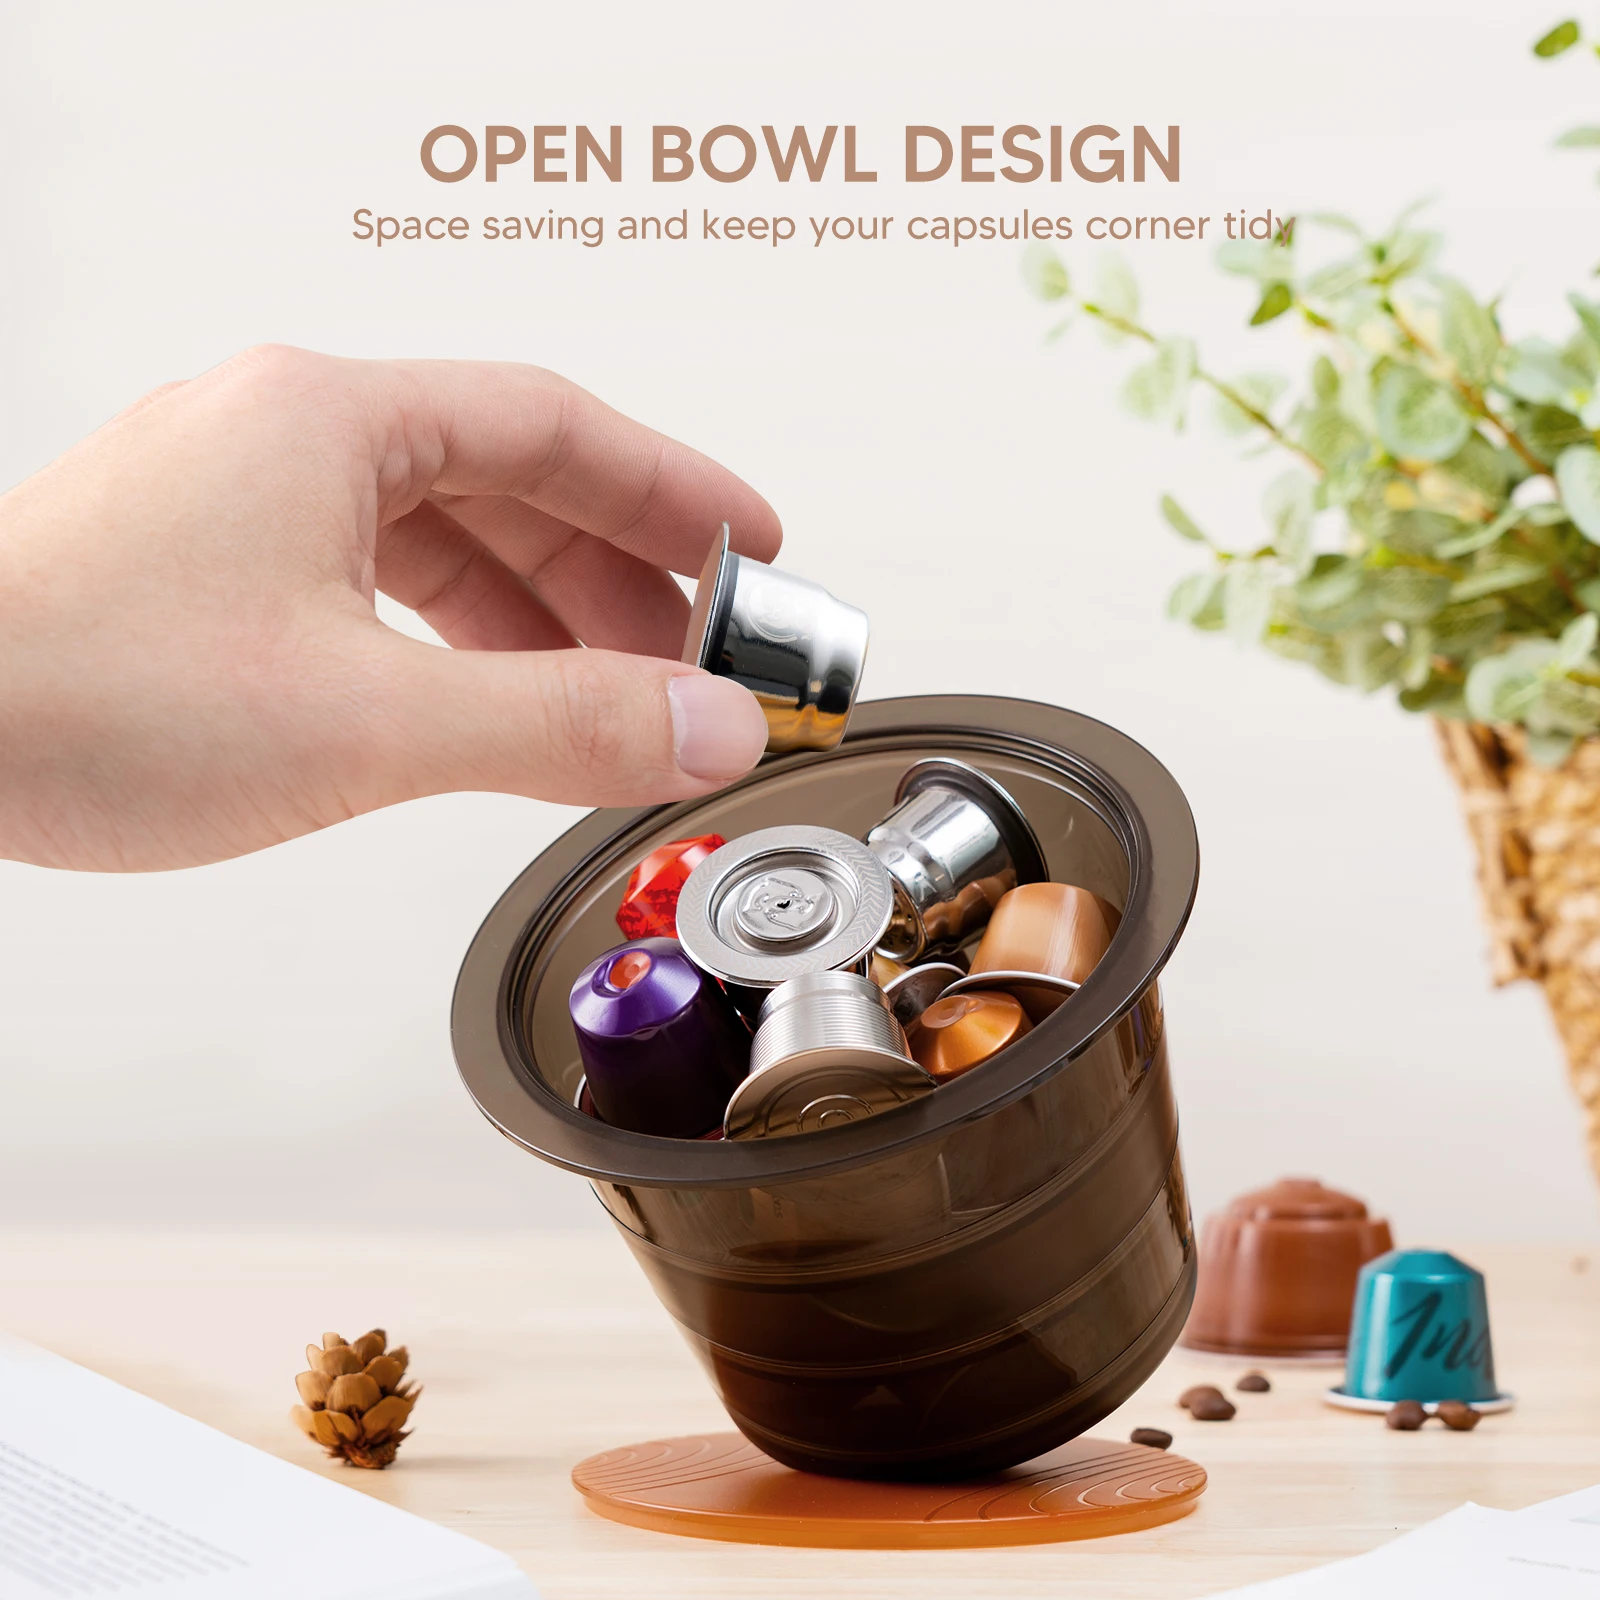 

Nespresso Coffee Capsule Storage Box Acrylic Dustproof Practical Coffee Pods Organizer Holder Basket For Home Cafe Hotel